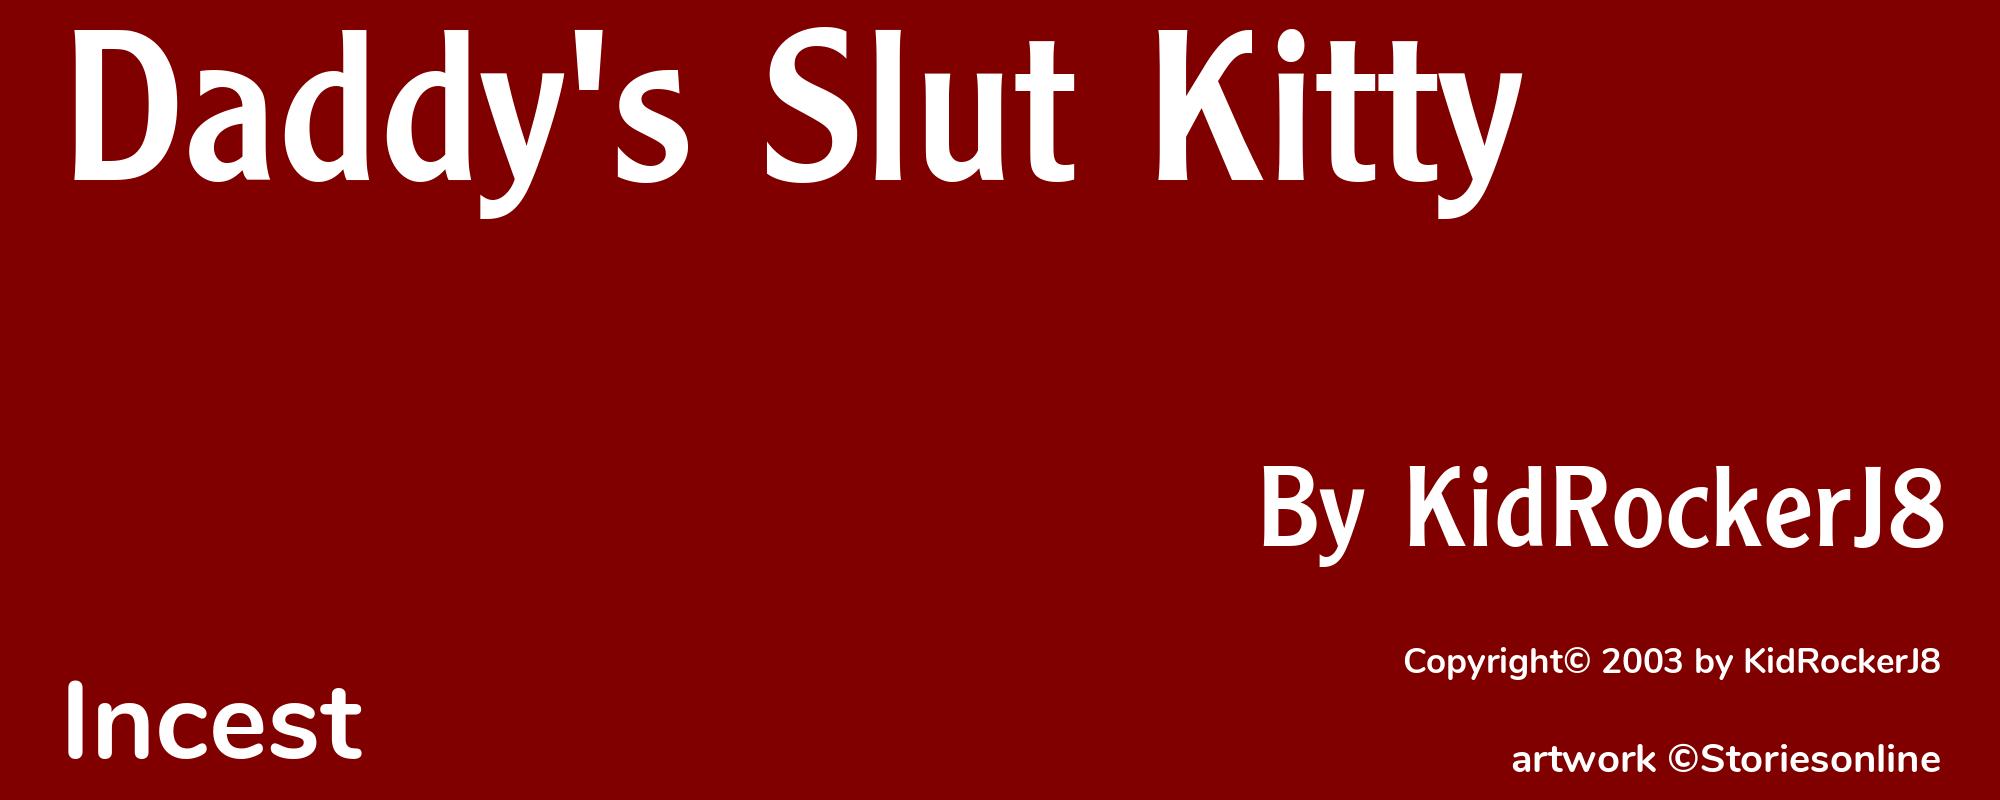 Daddy's Slut Kitty - Cover